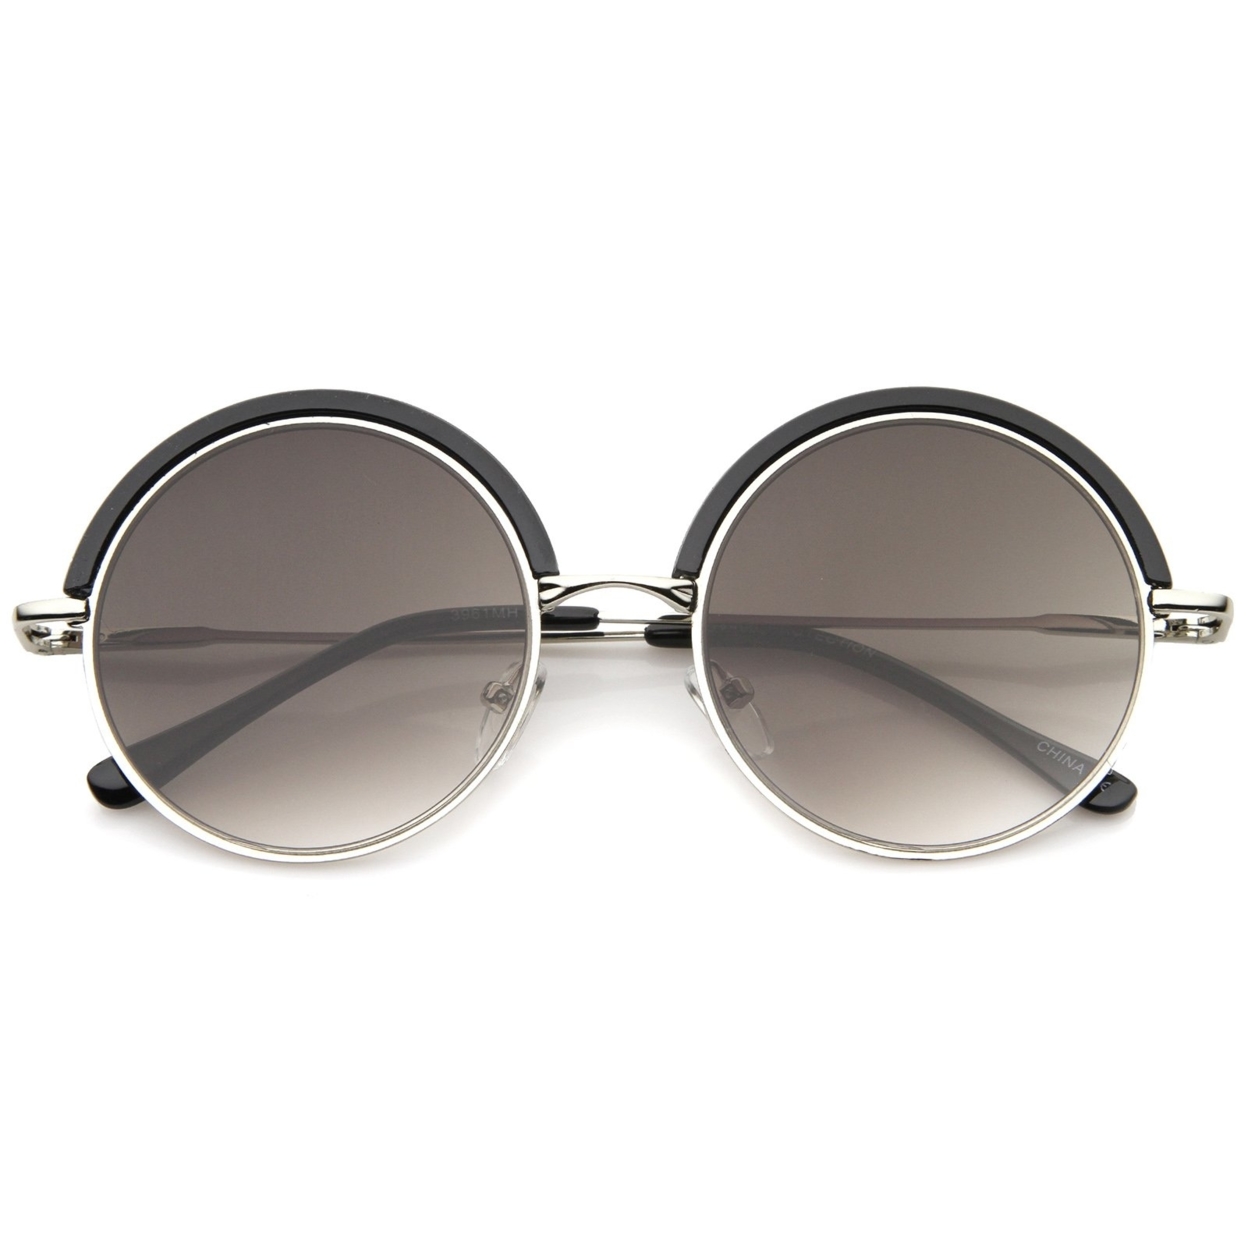 Retro Metal Frame Thin Temple Top Trim Flat Lens Round Sunglasses 51mm - Black-Gold / Smoke